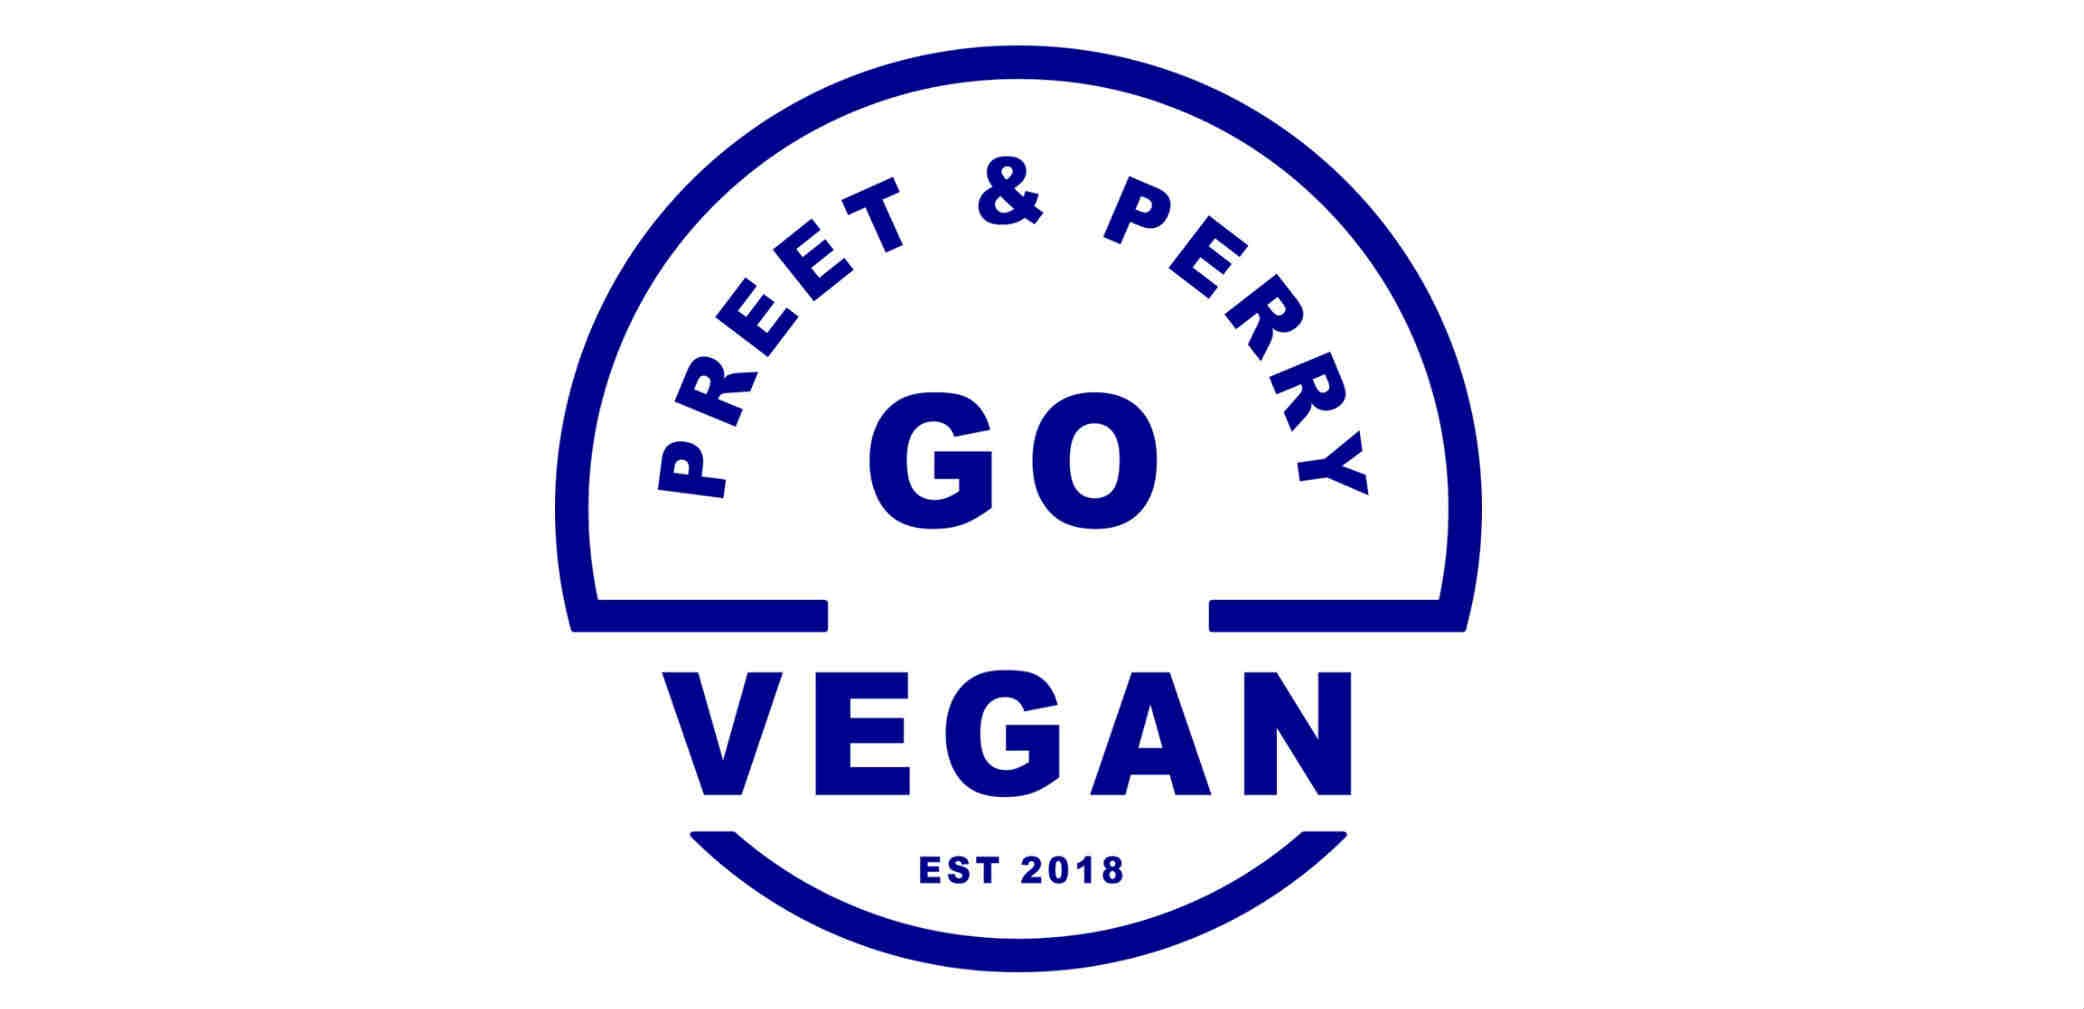 New vegan food business in Hertfordshire